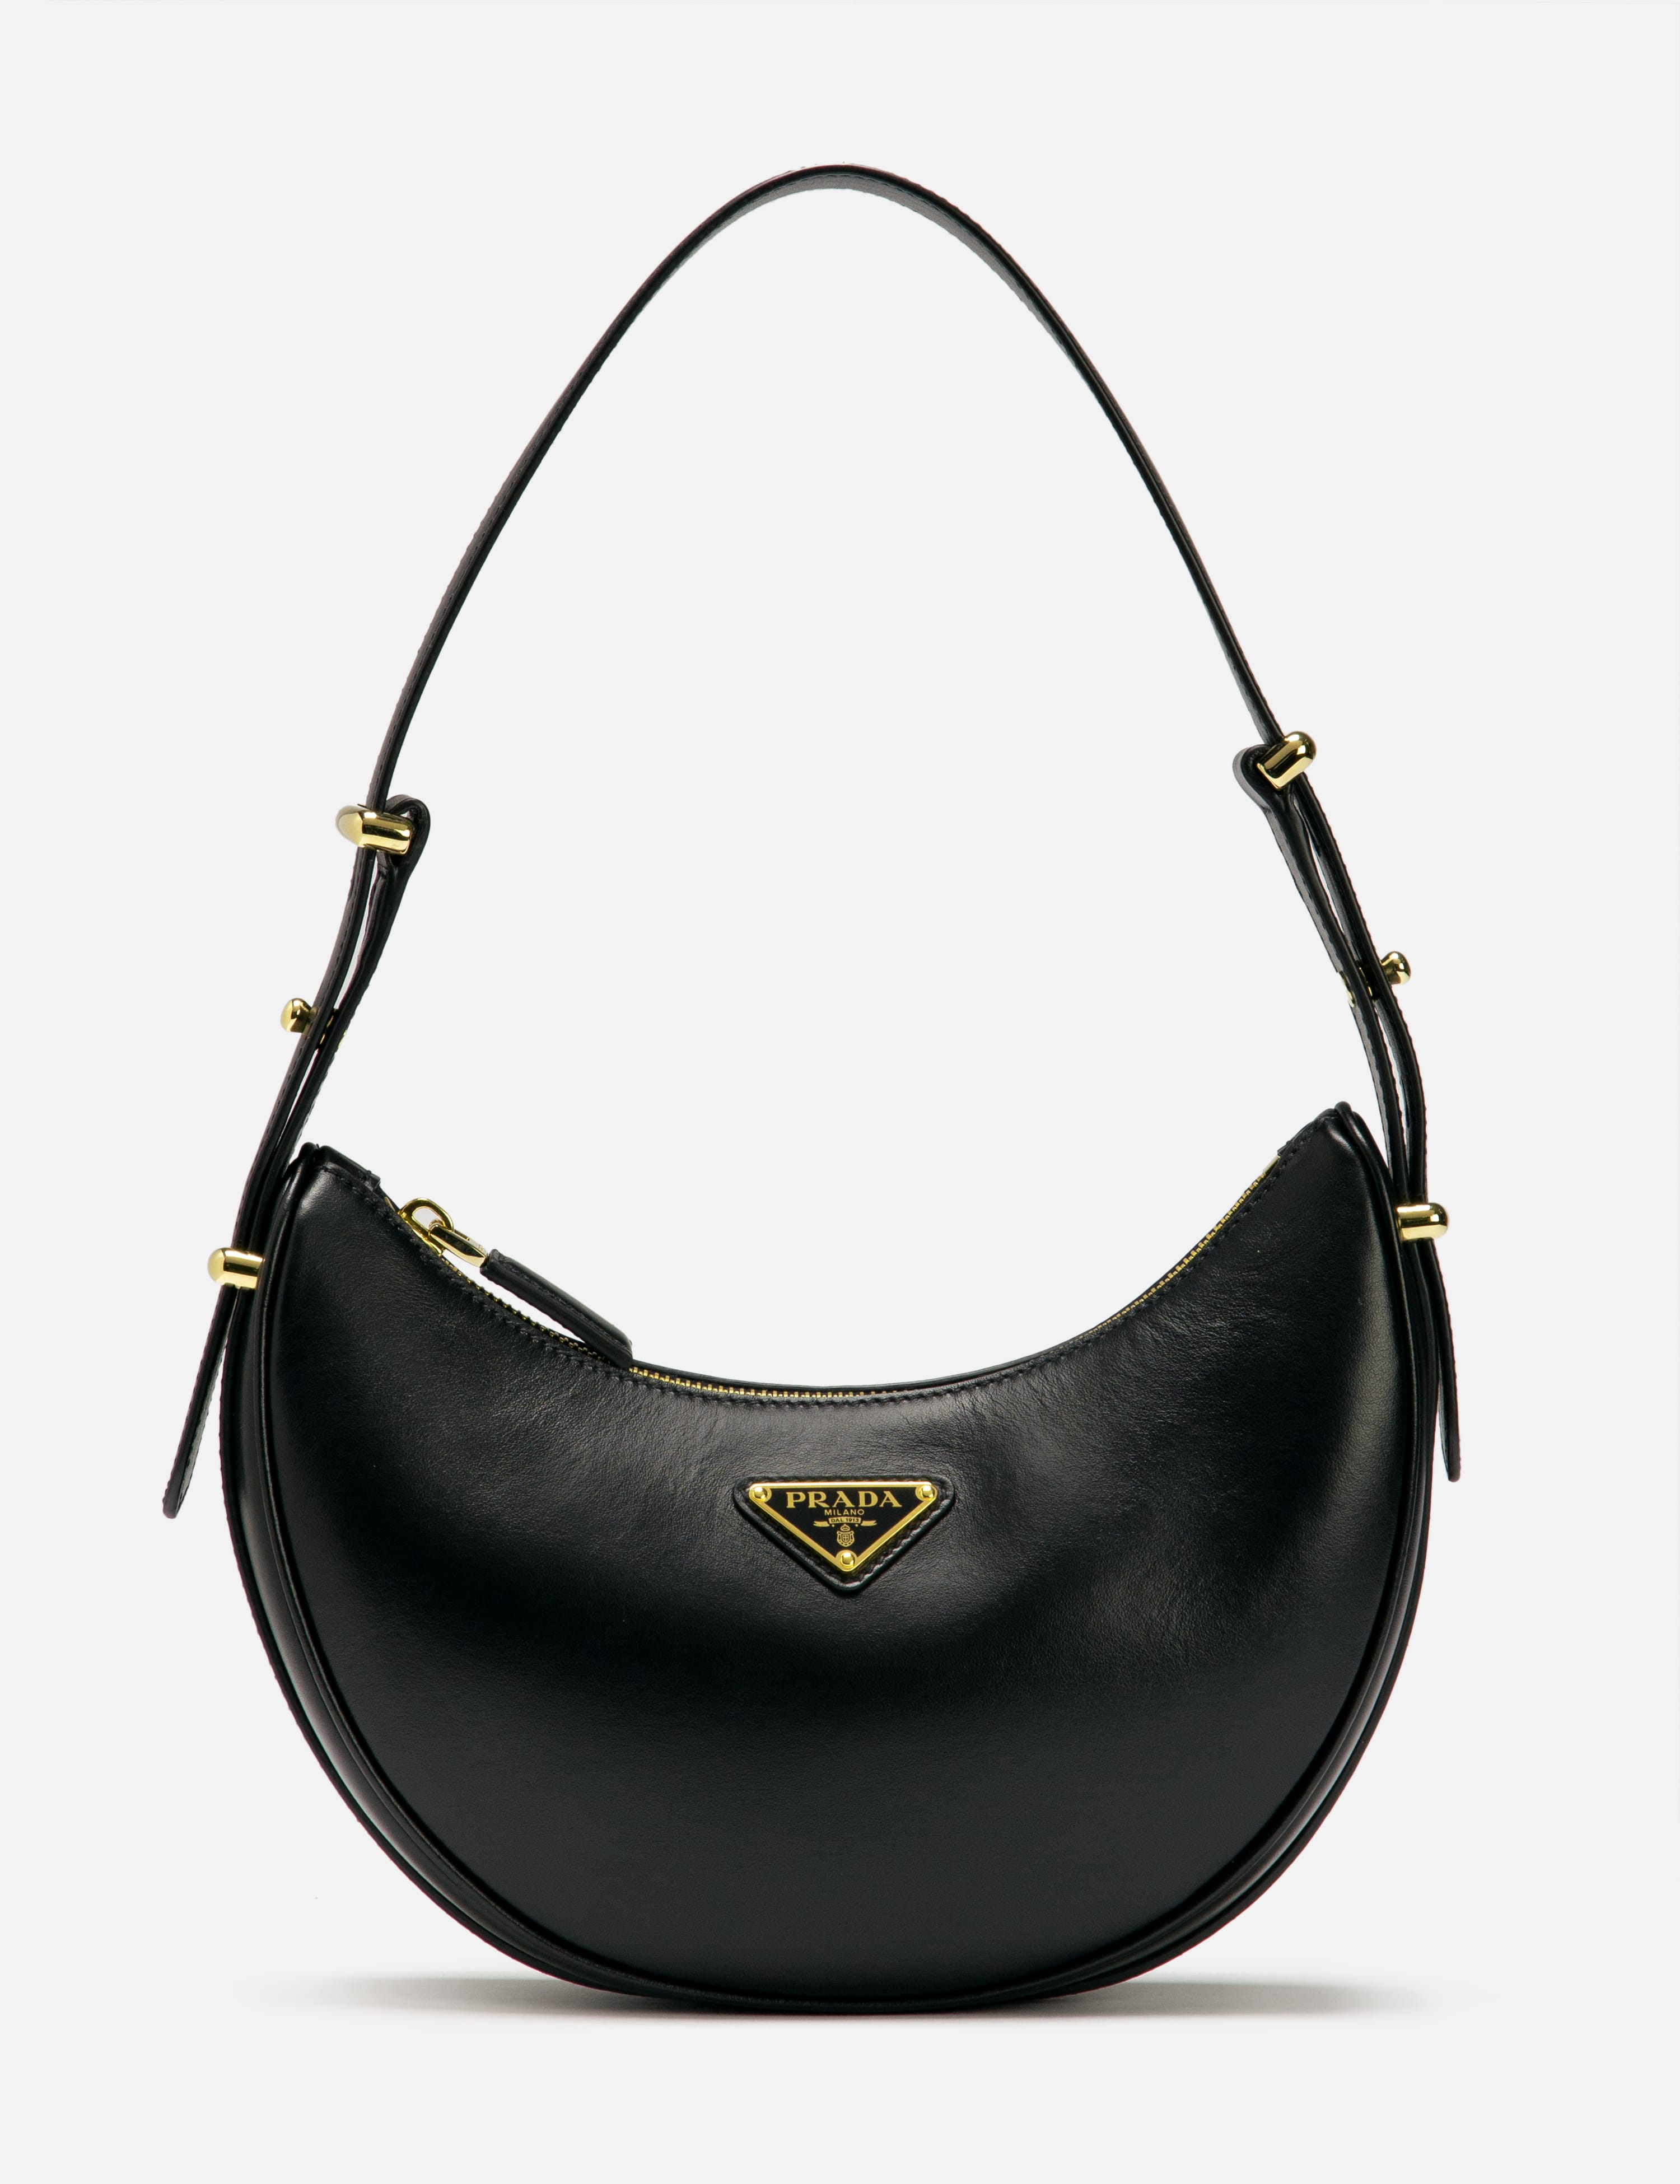 Prada - Prada Arqué Leather Shoulder Bag | HBX - Globally Curated